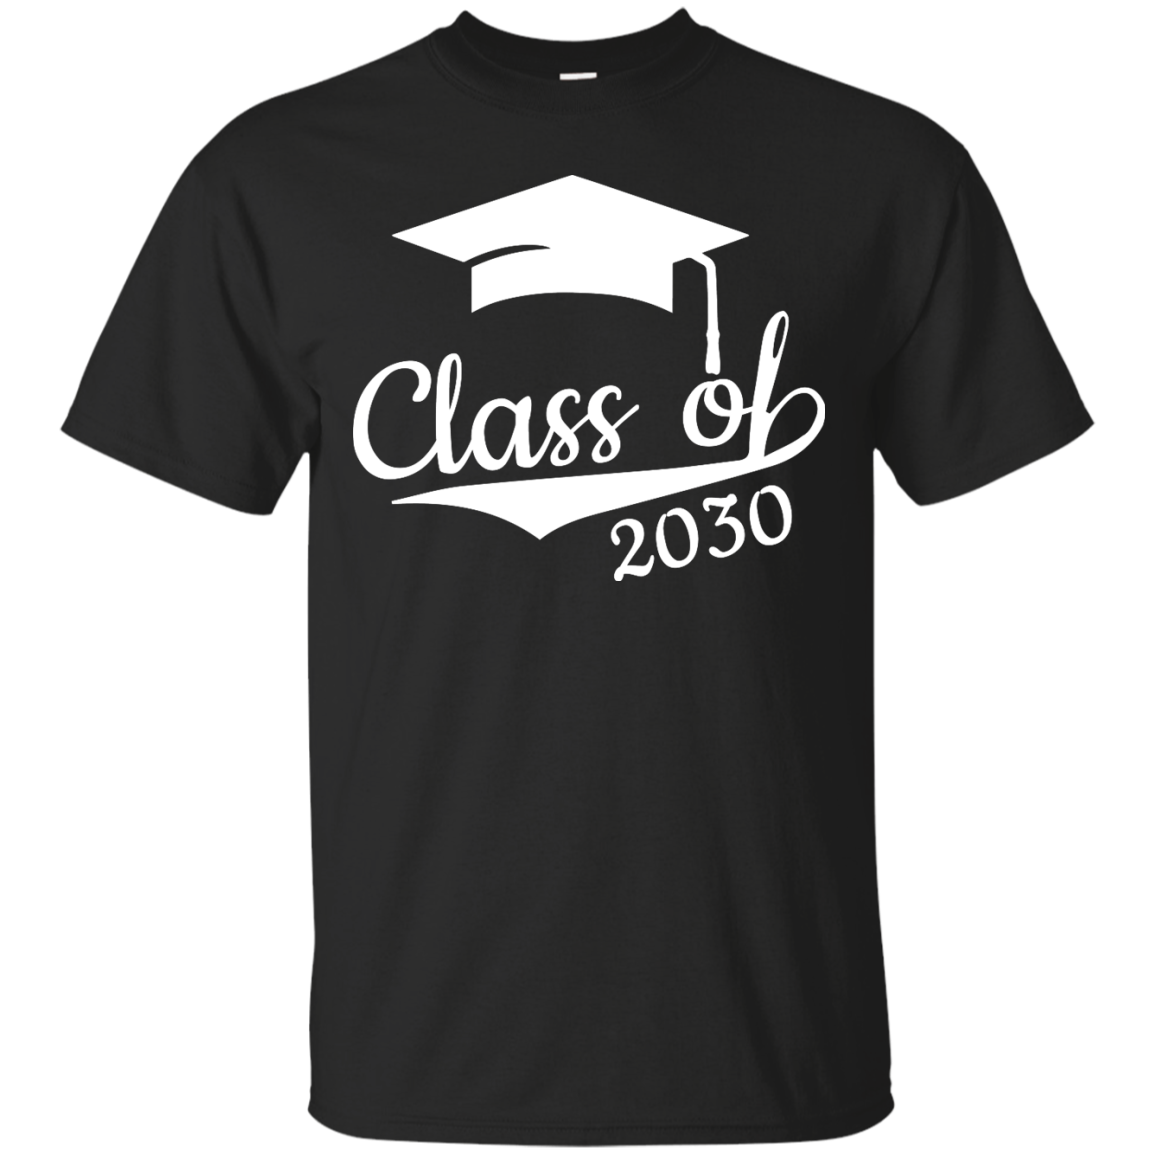 Back to School Class Of 2030 shirt, tank top